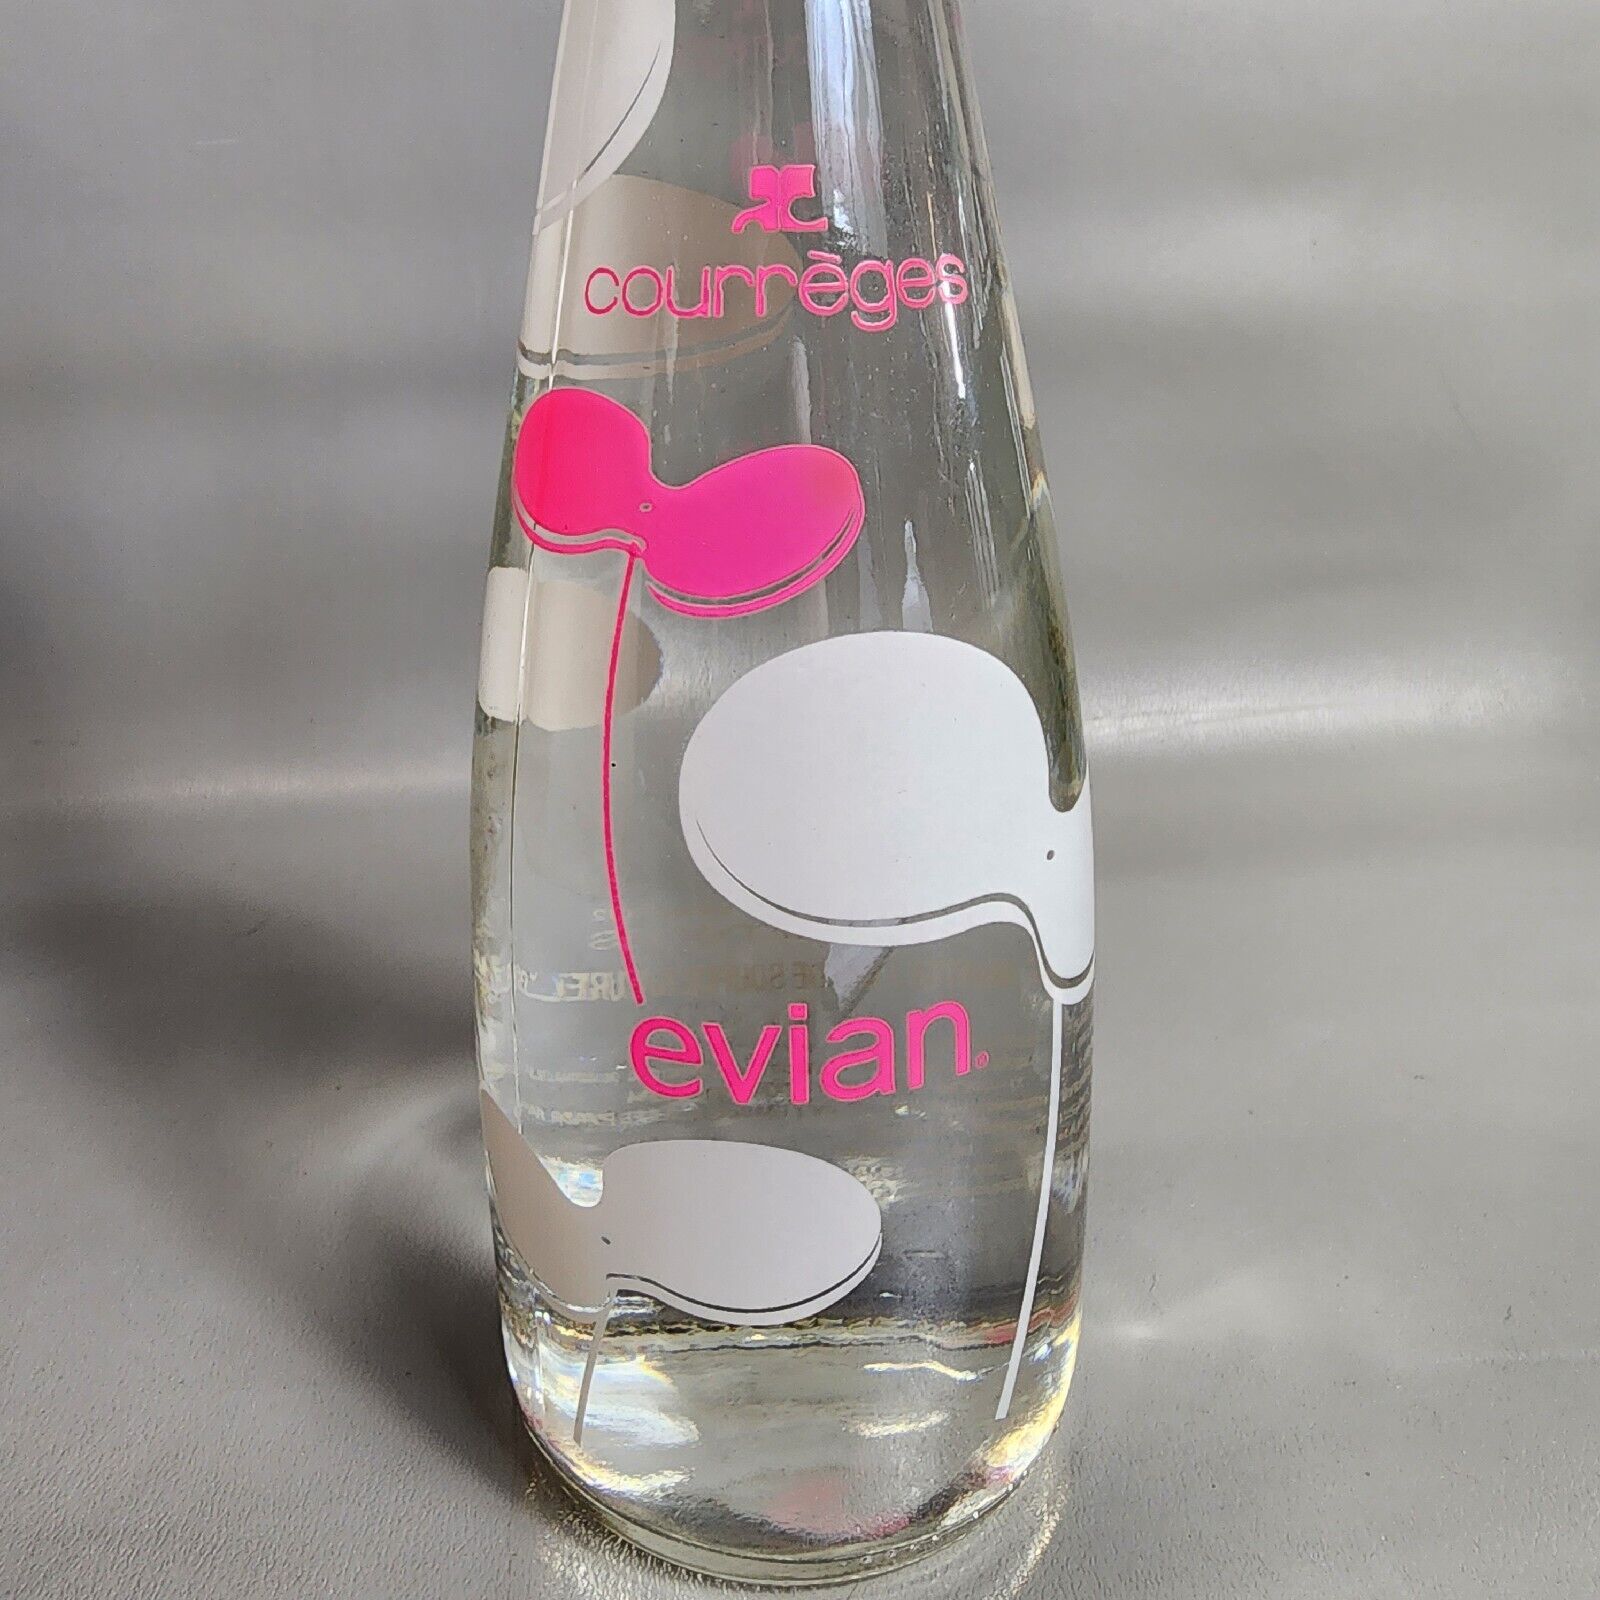 Evian Limited Edition 2012 Courreges Glass Bottle French Designer Unopened